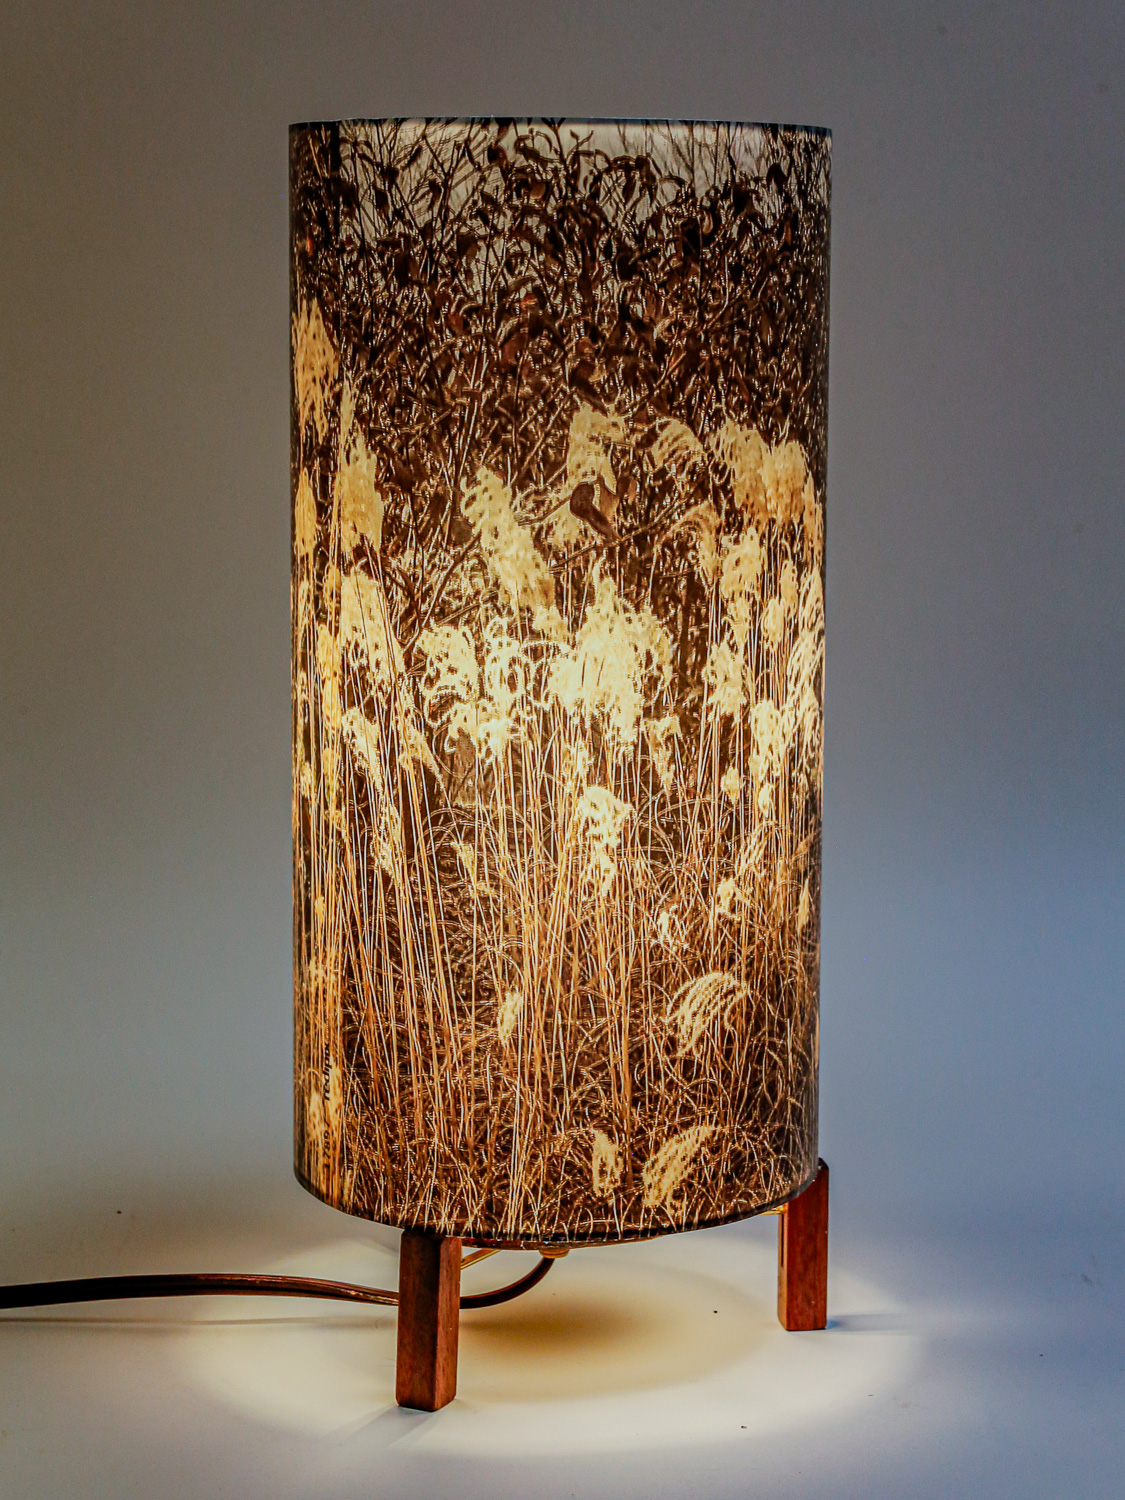 159: Minimalist lamp image of decorative grass. -- Photo on Lamp shade by David Elmore